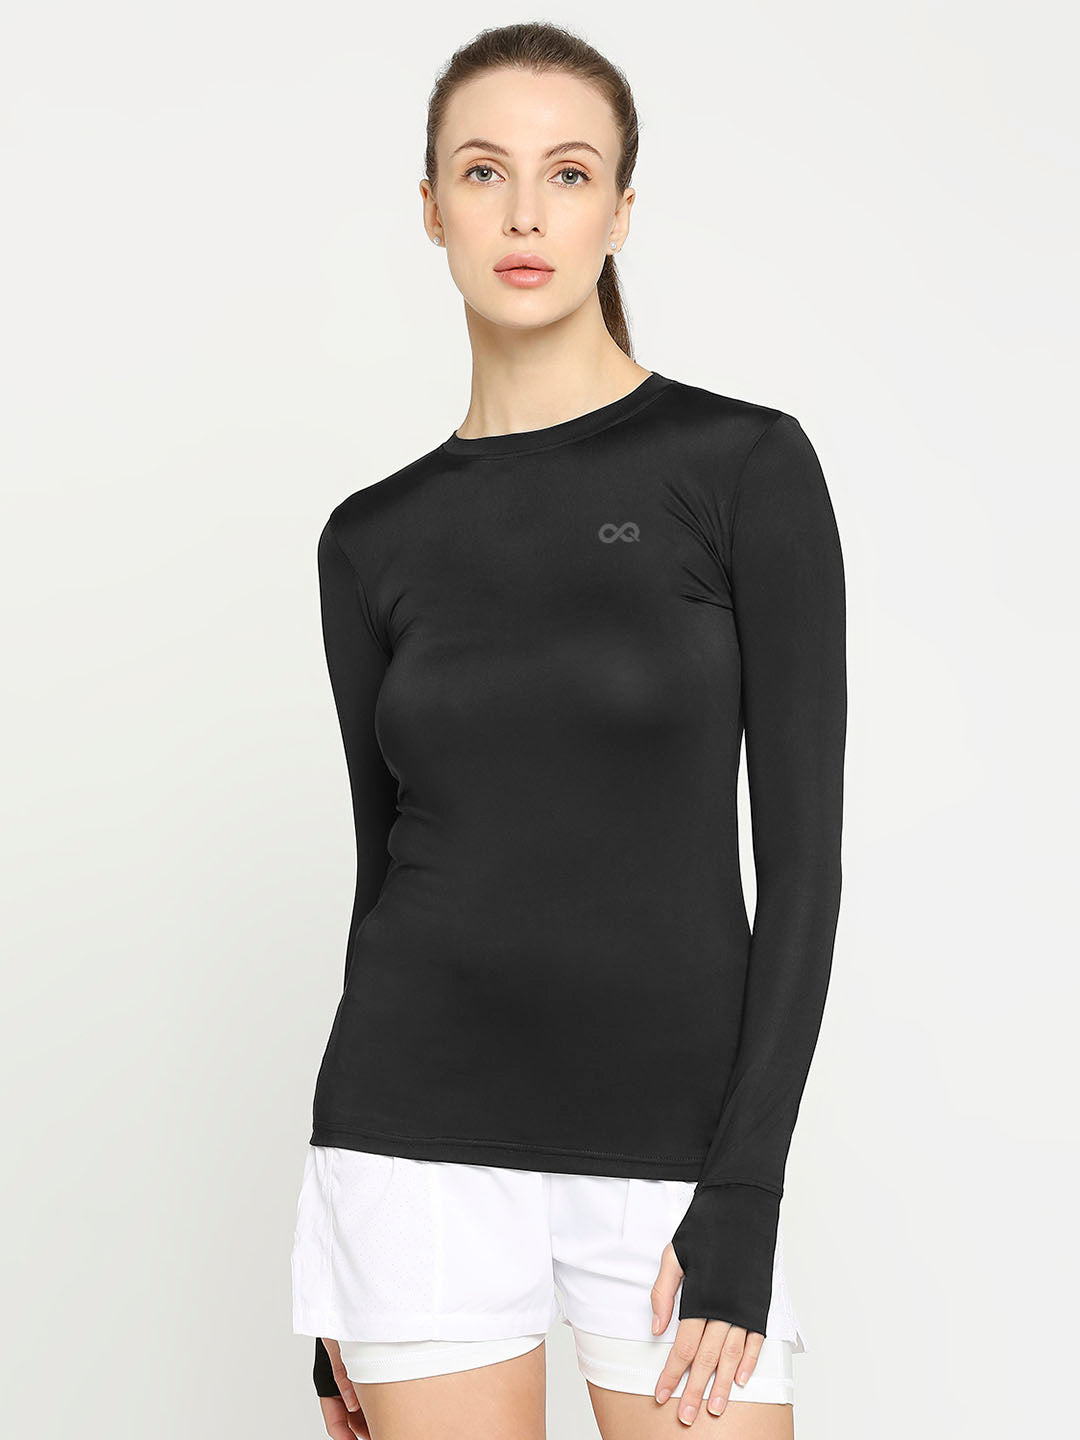 Women's Black Long Sleeve Sports T-Shirt - Stay Stylish and